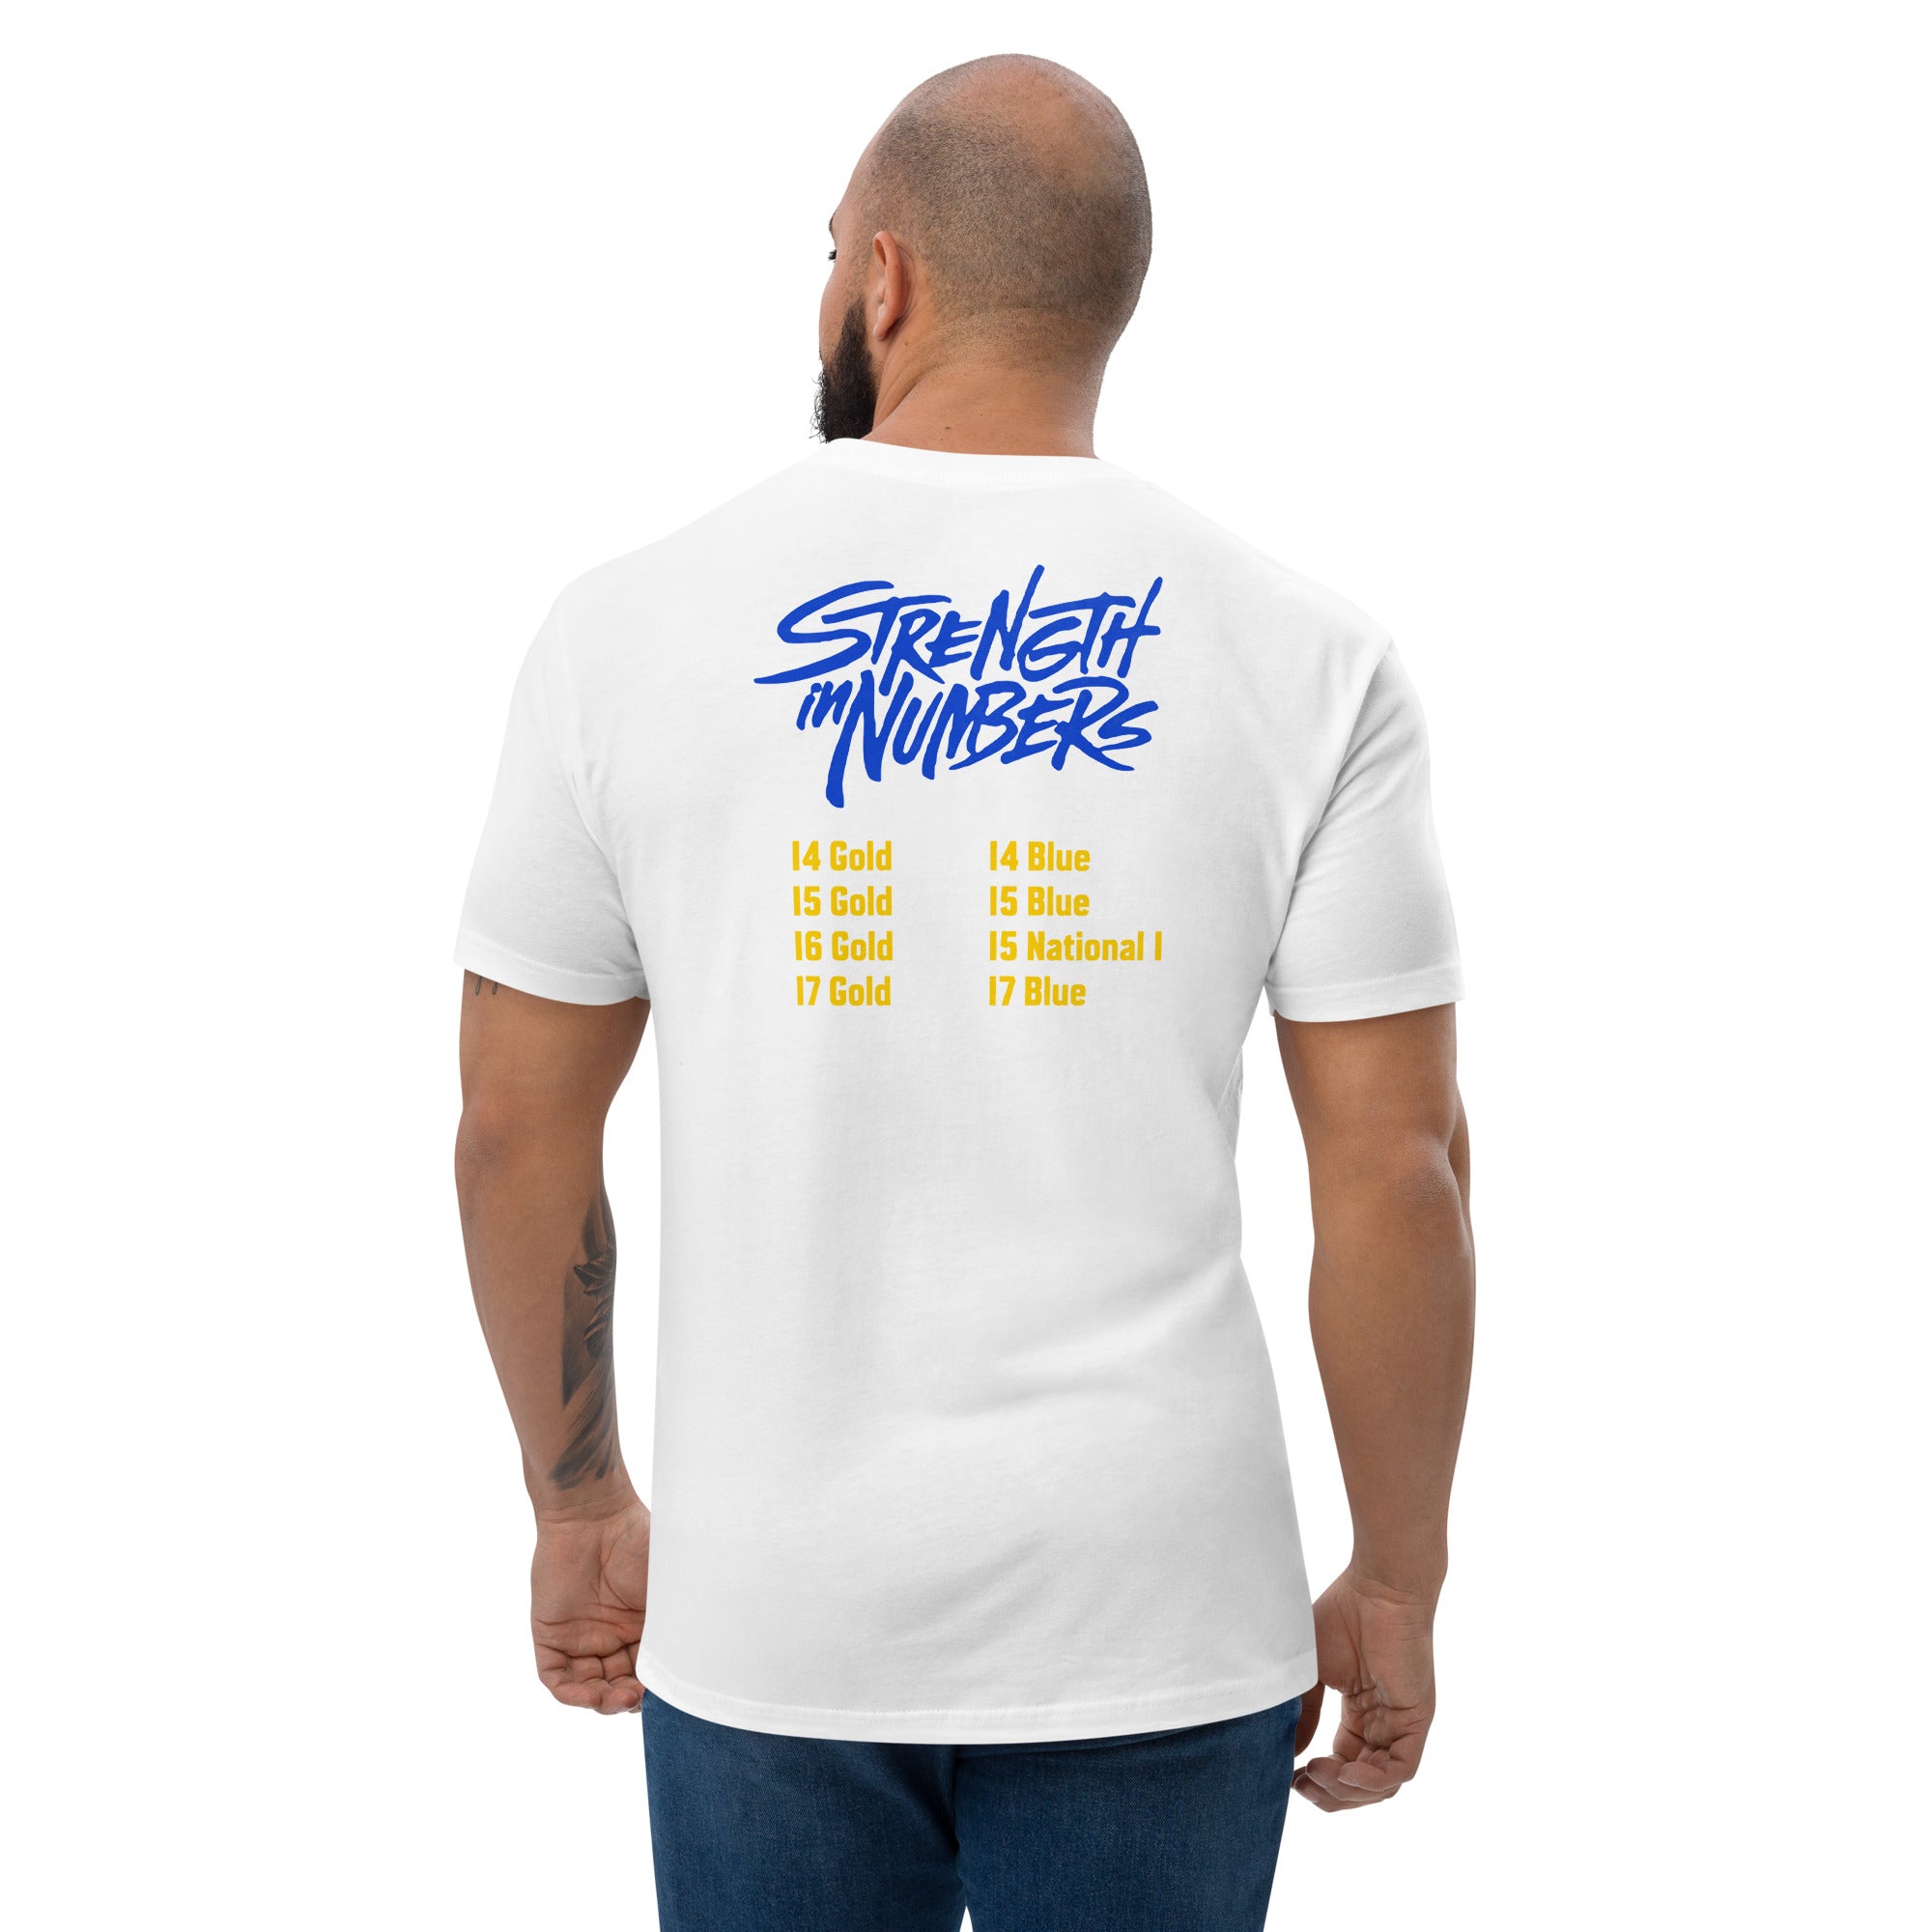 23 USAV Nationals Chicago Short Sleeve T-shirt